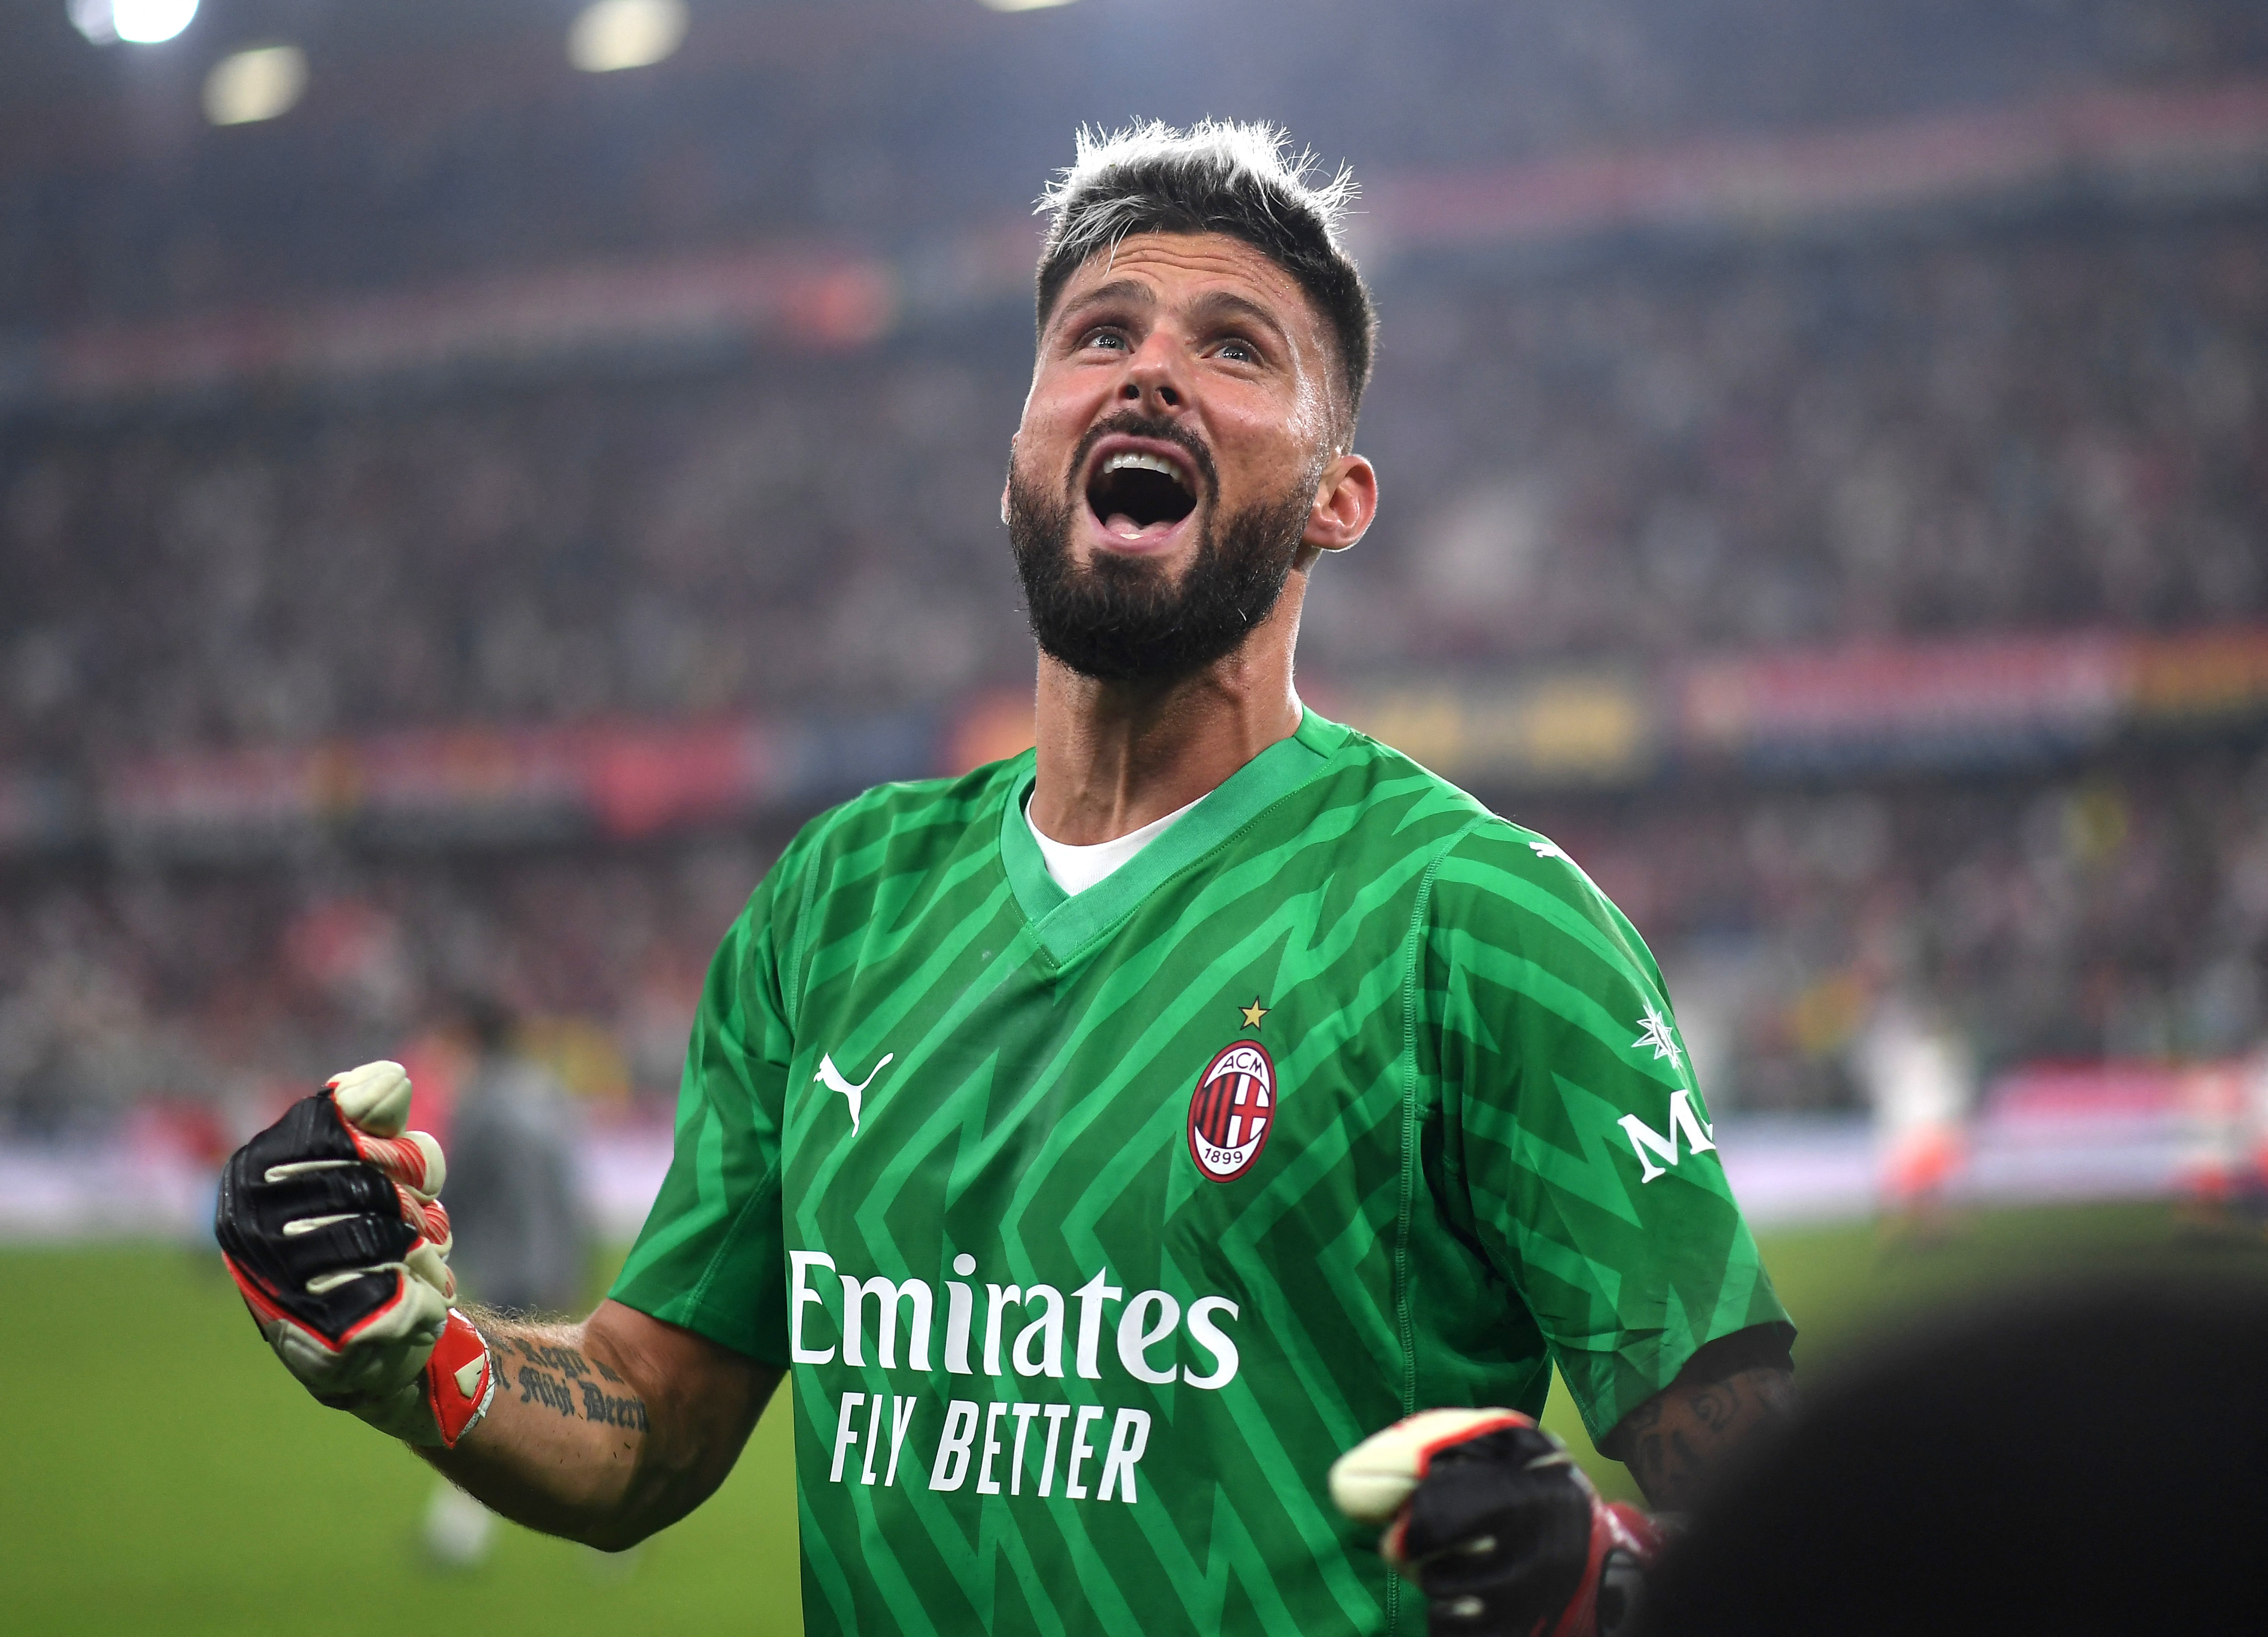 AC Milan make 'Giroud 9' goalkeeper shirts available to buy after